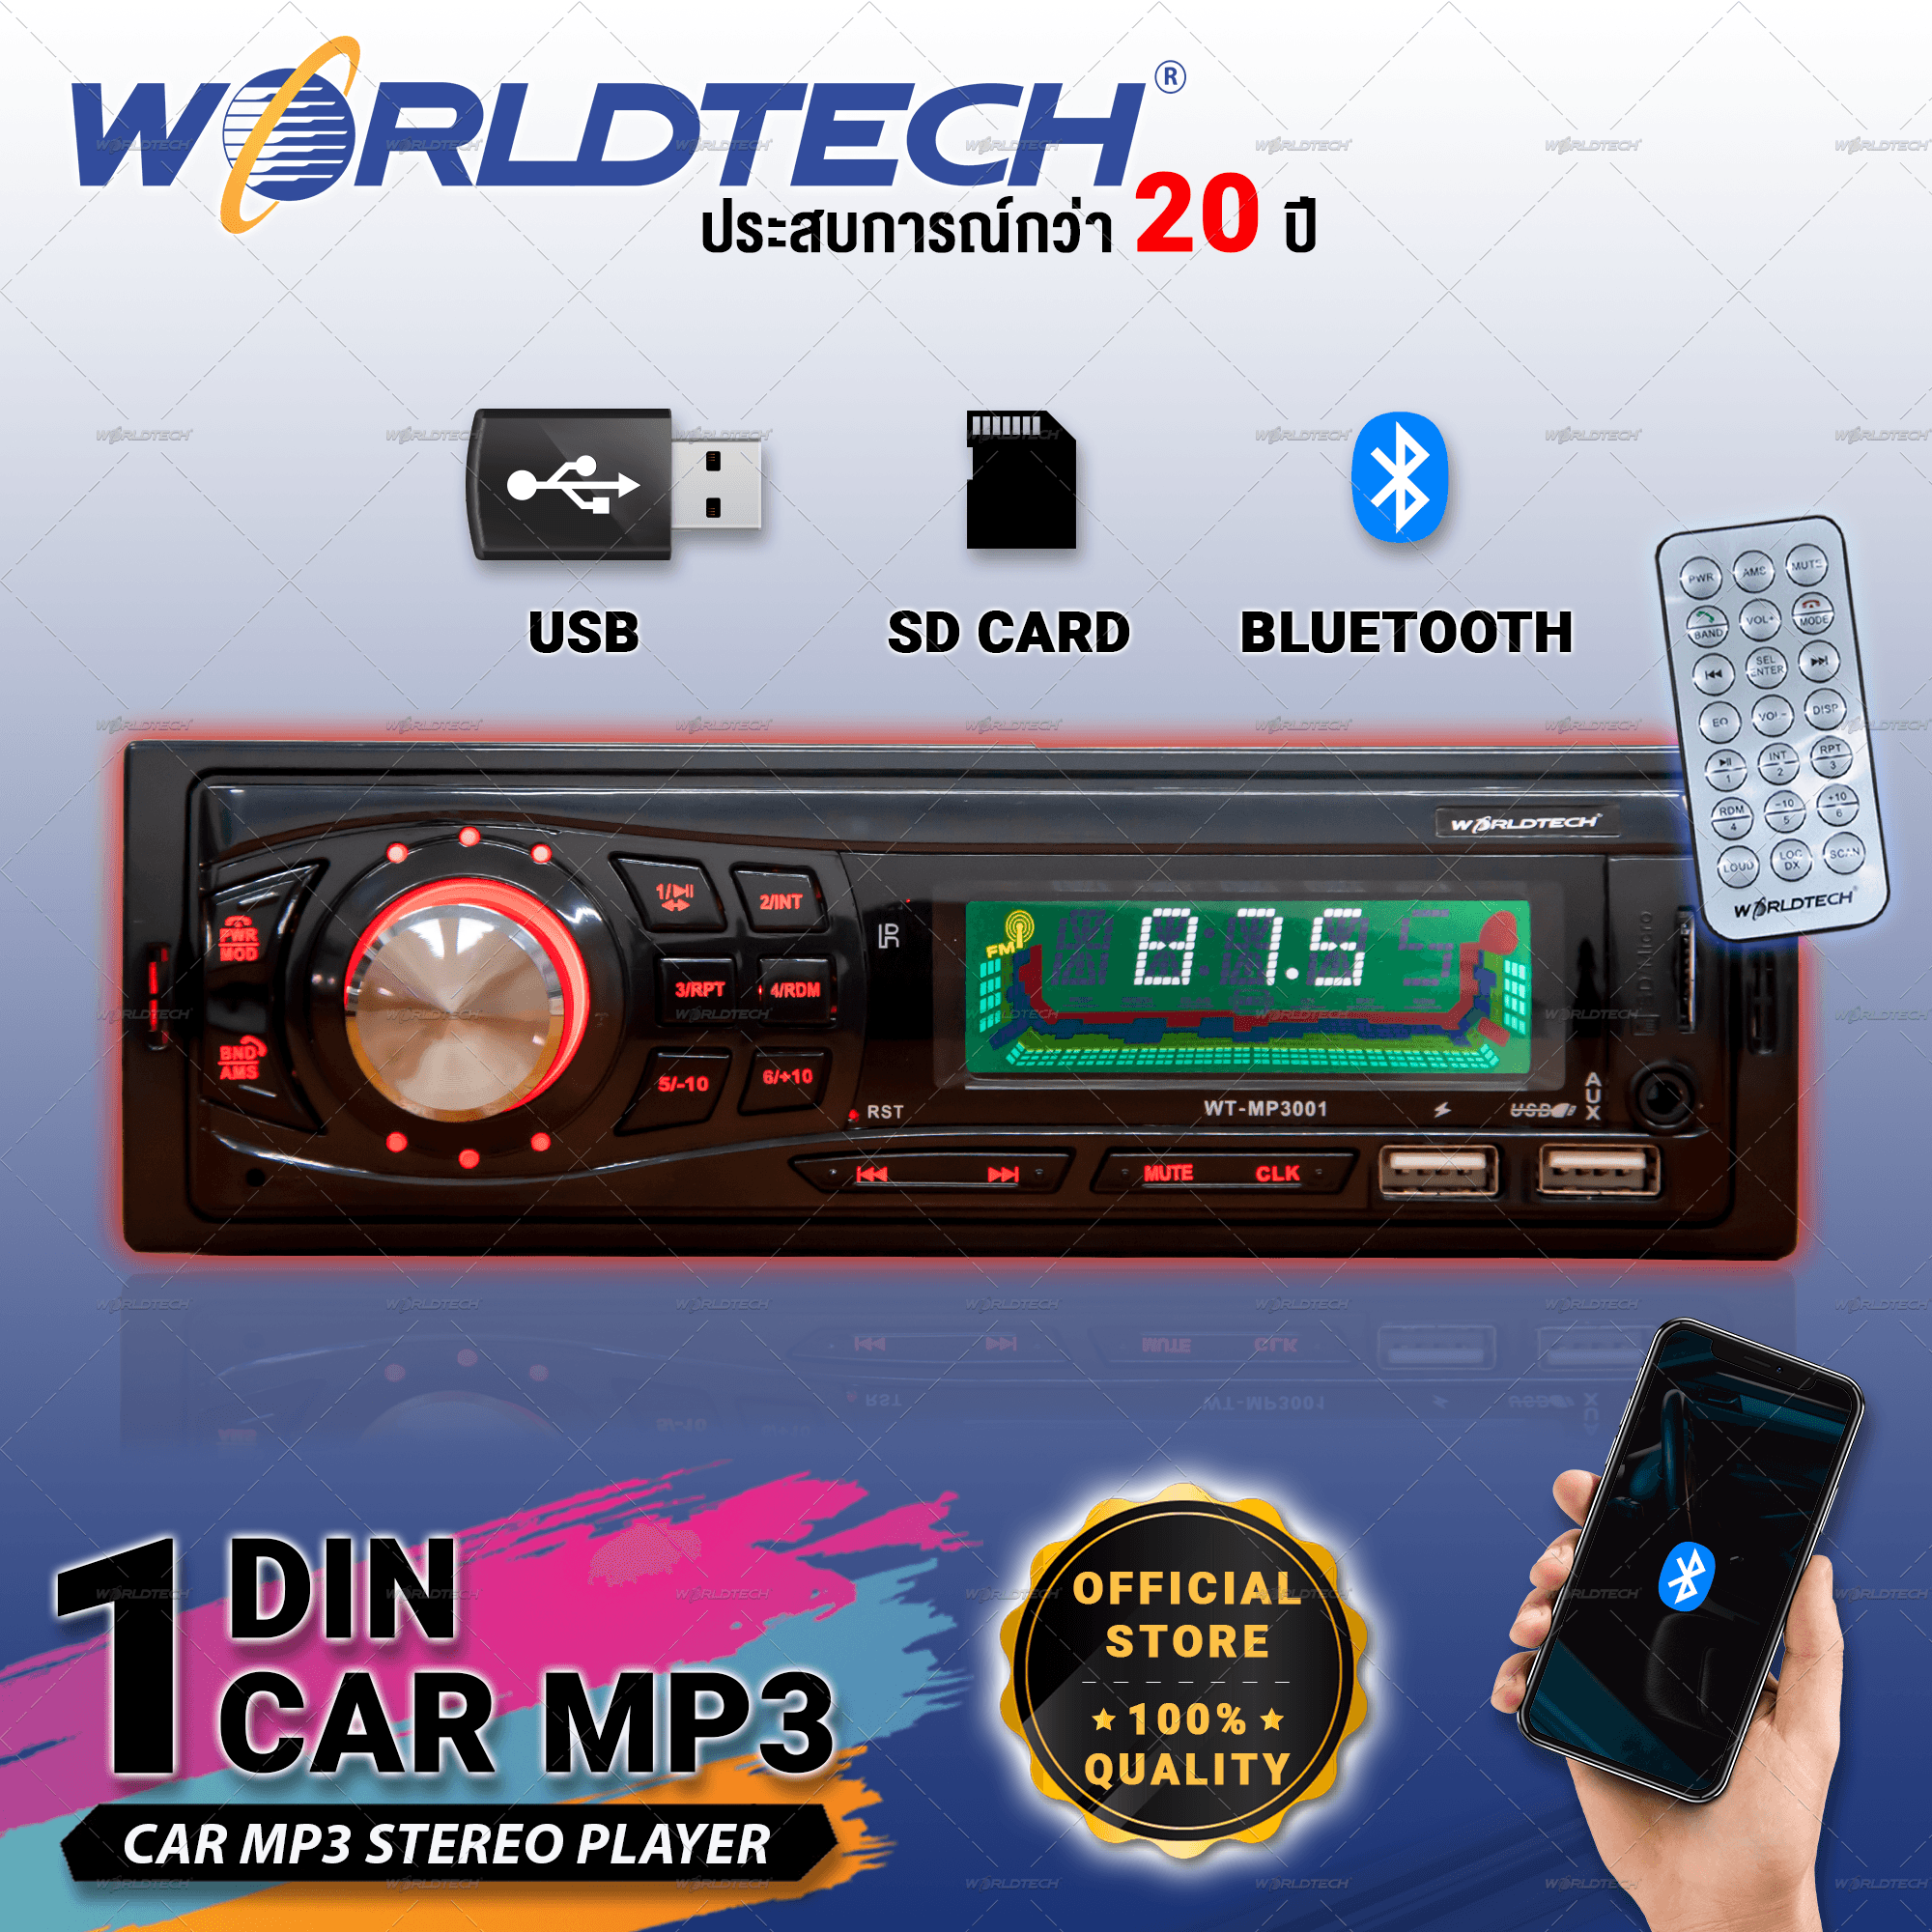 Worldtech รุ่น WT-MP3001 เครื่องเสียงรถ,วิทยุติดรถยนต์ 1Din (วิทยุ mp3 usb บลูทูธ)